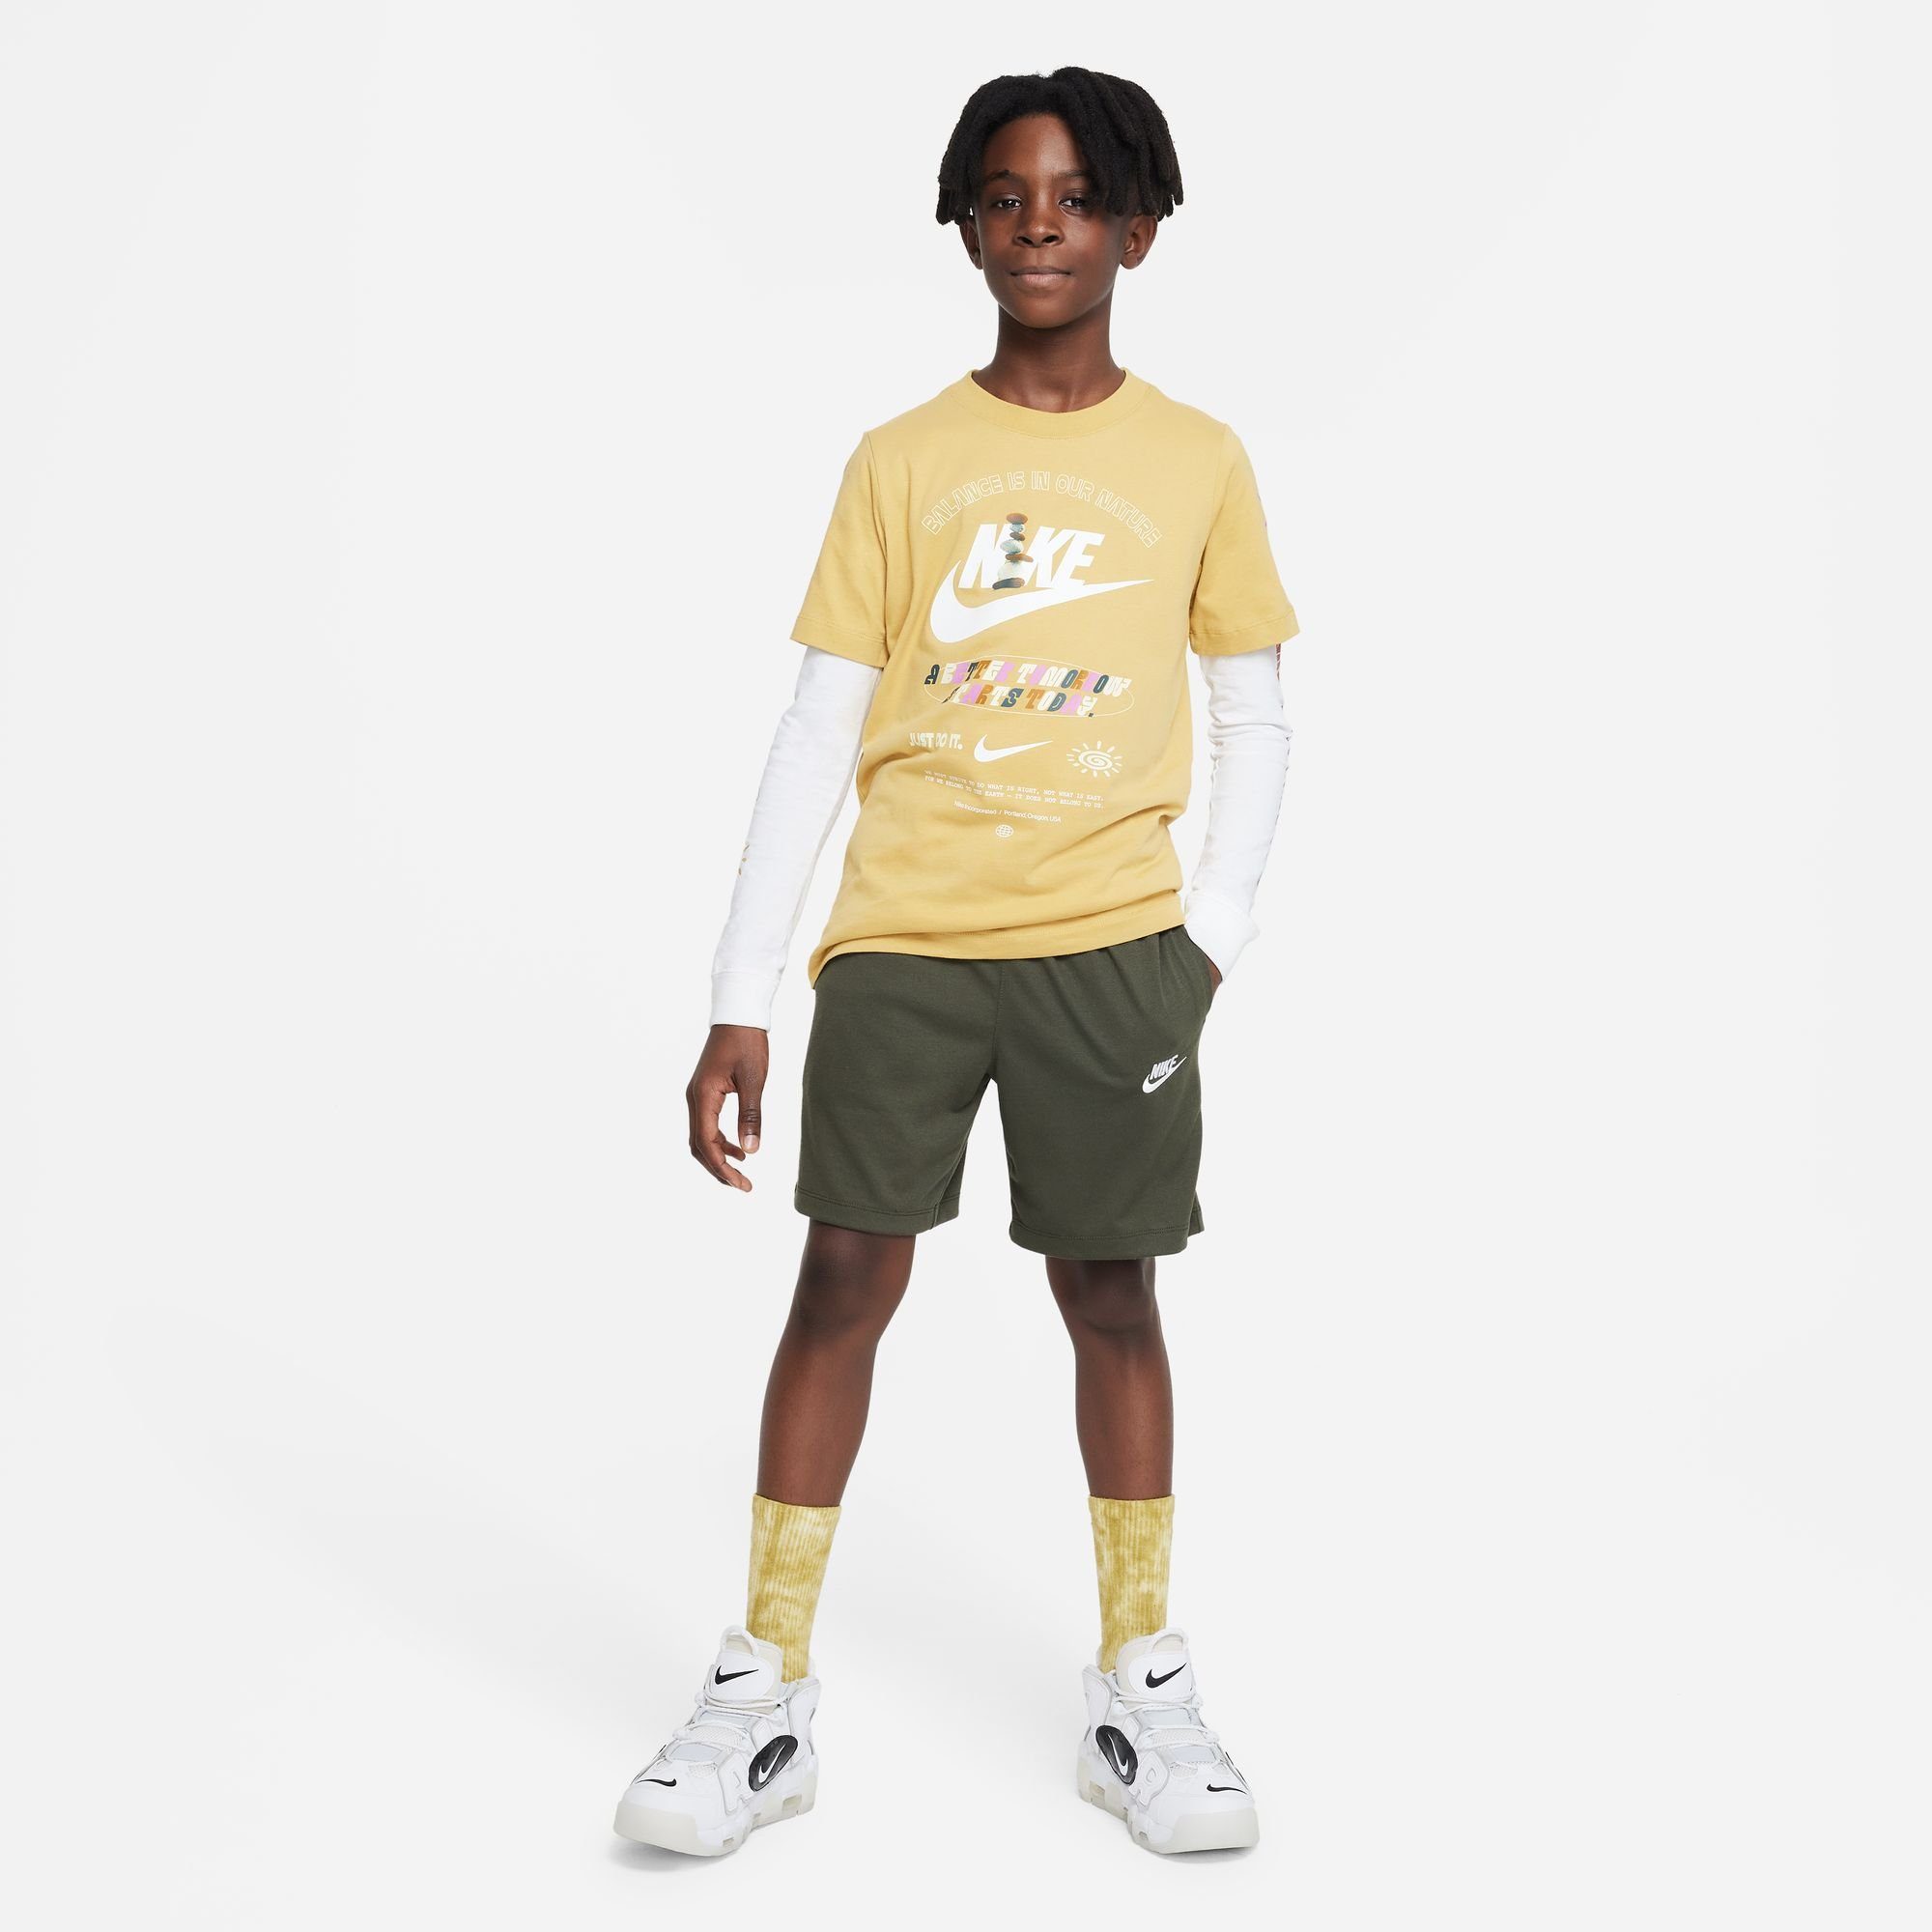 JERSEY KIDS' SHORTS BIG CARGO Sportswear Nike (BOYS) KHAKI/WHITE Shorts